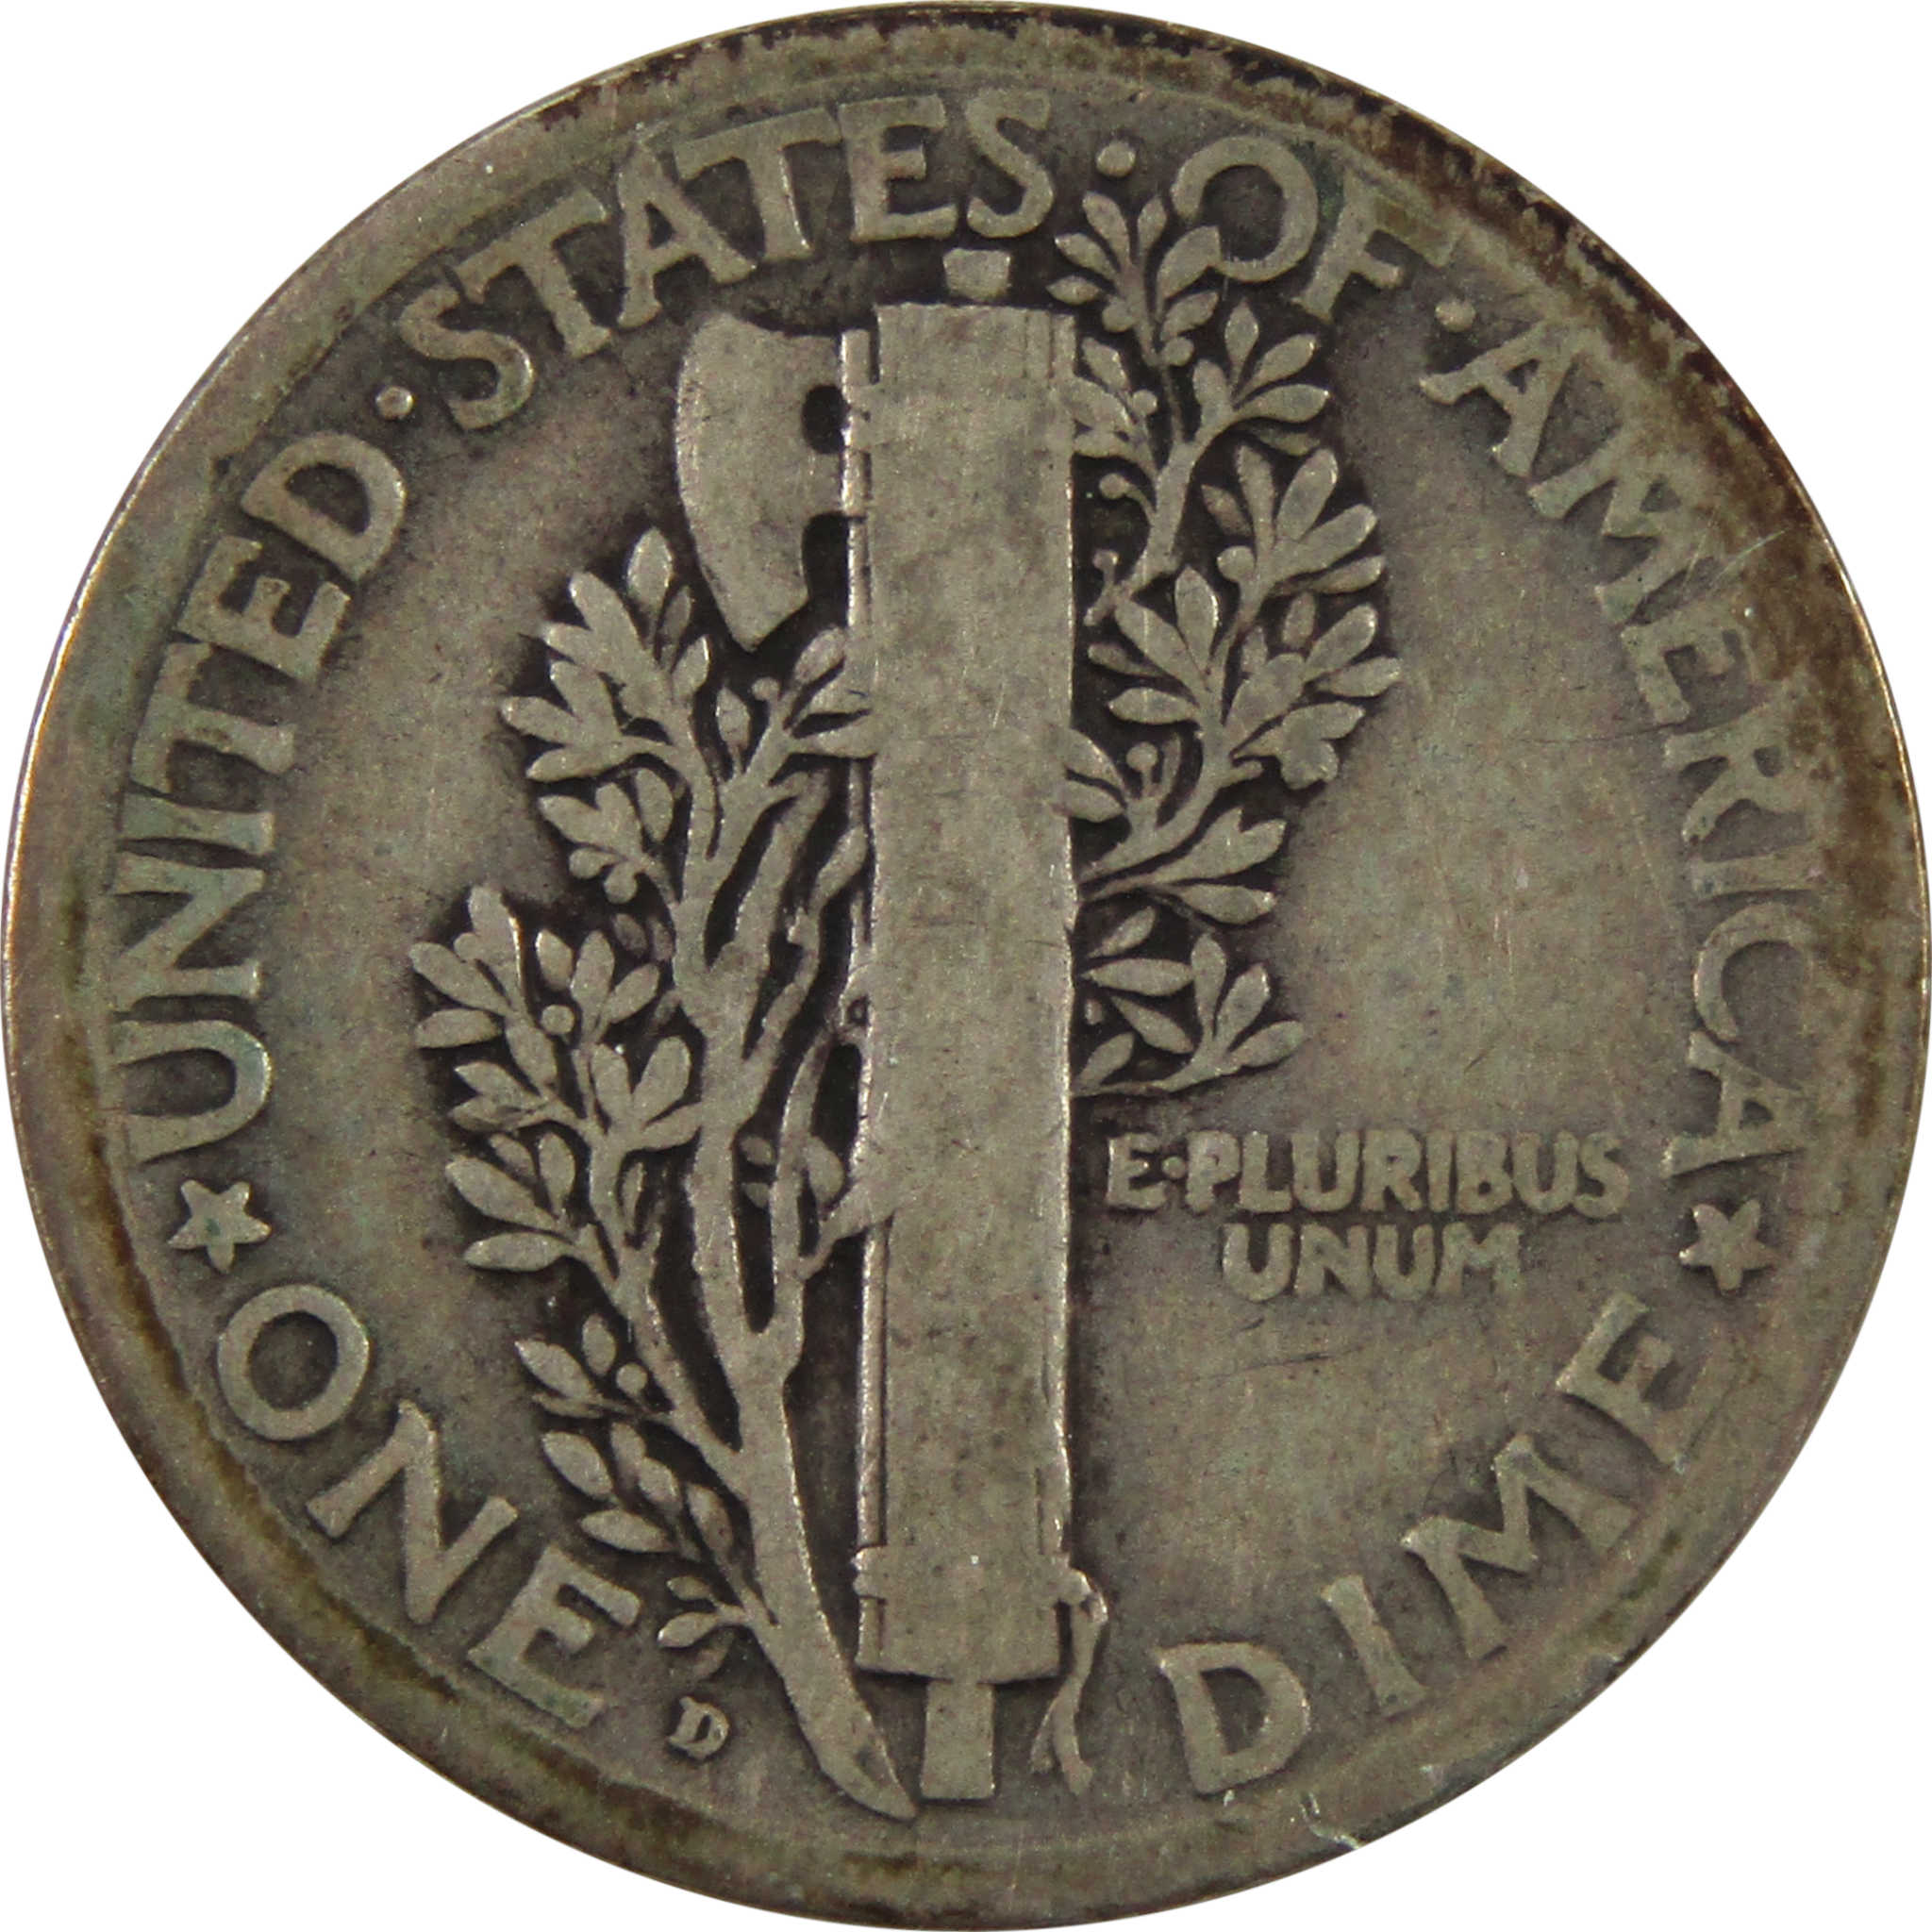 1921 D Mercury Dime VG Very Good 90% Silver 10c Coin SKU:I10260